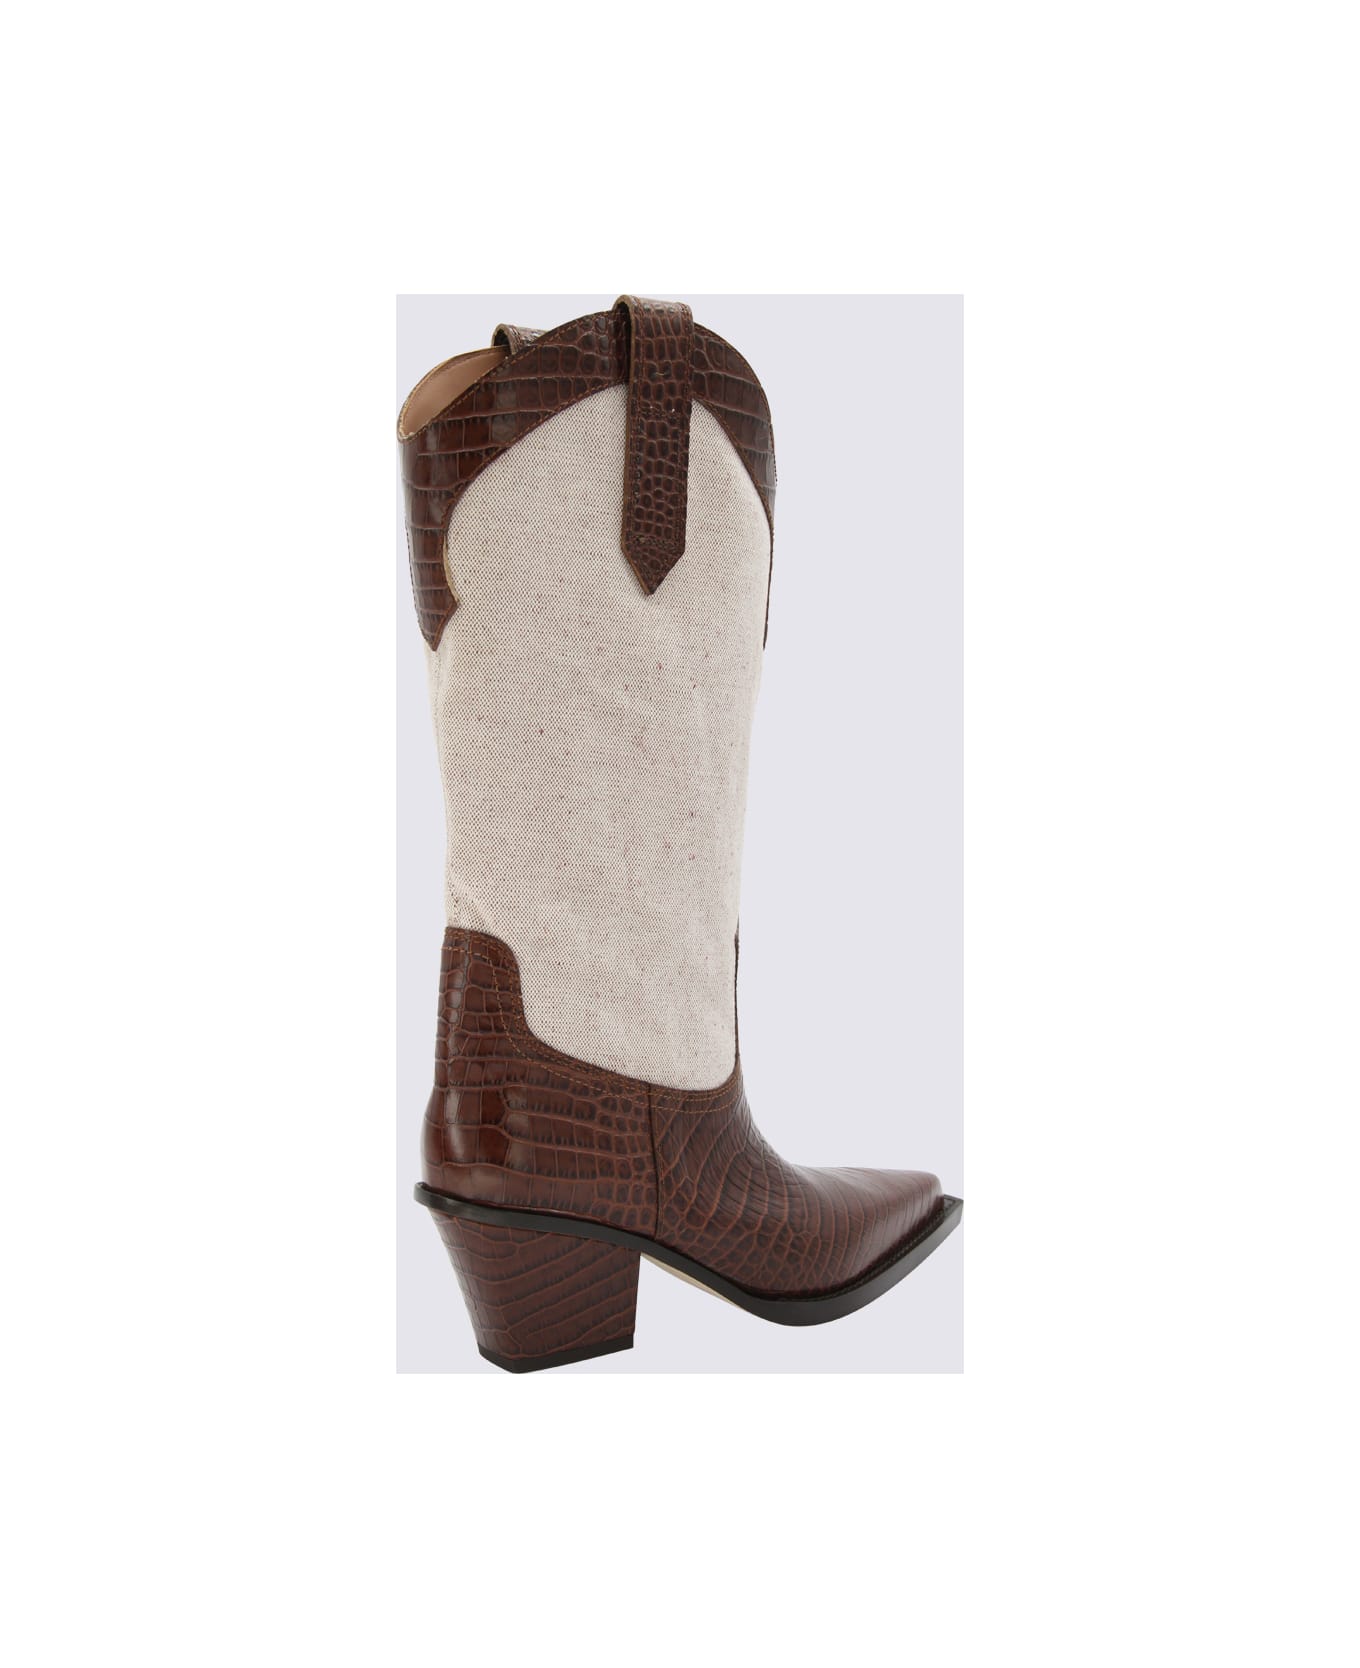 Paris Texas White And Brown Leather Rosario Boots - CIOCCOLATO/BROWN NATURALE ブーツ